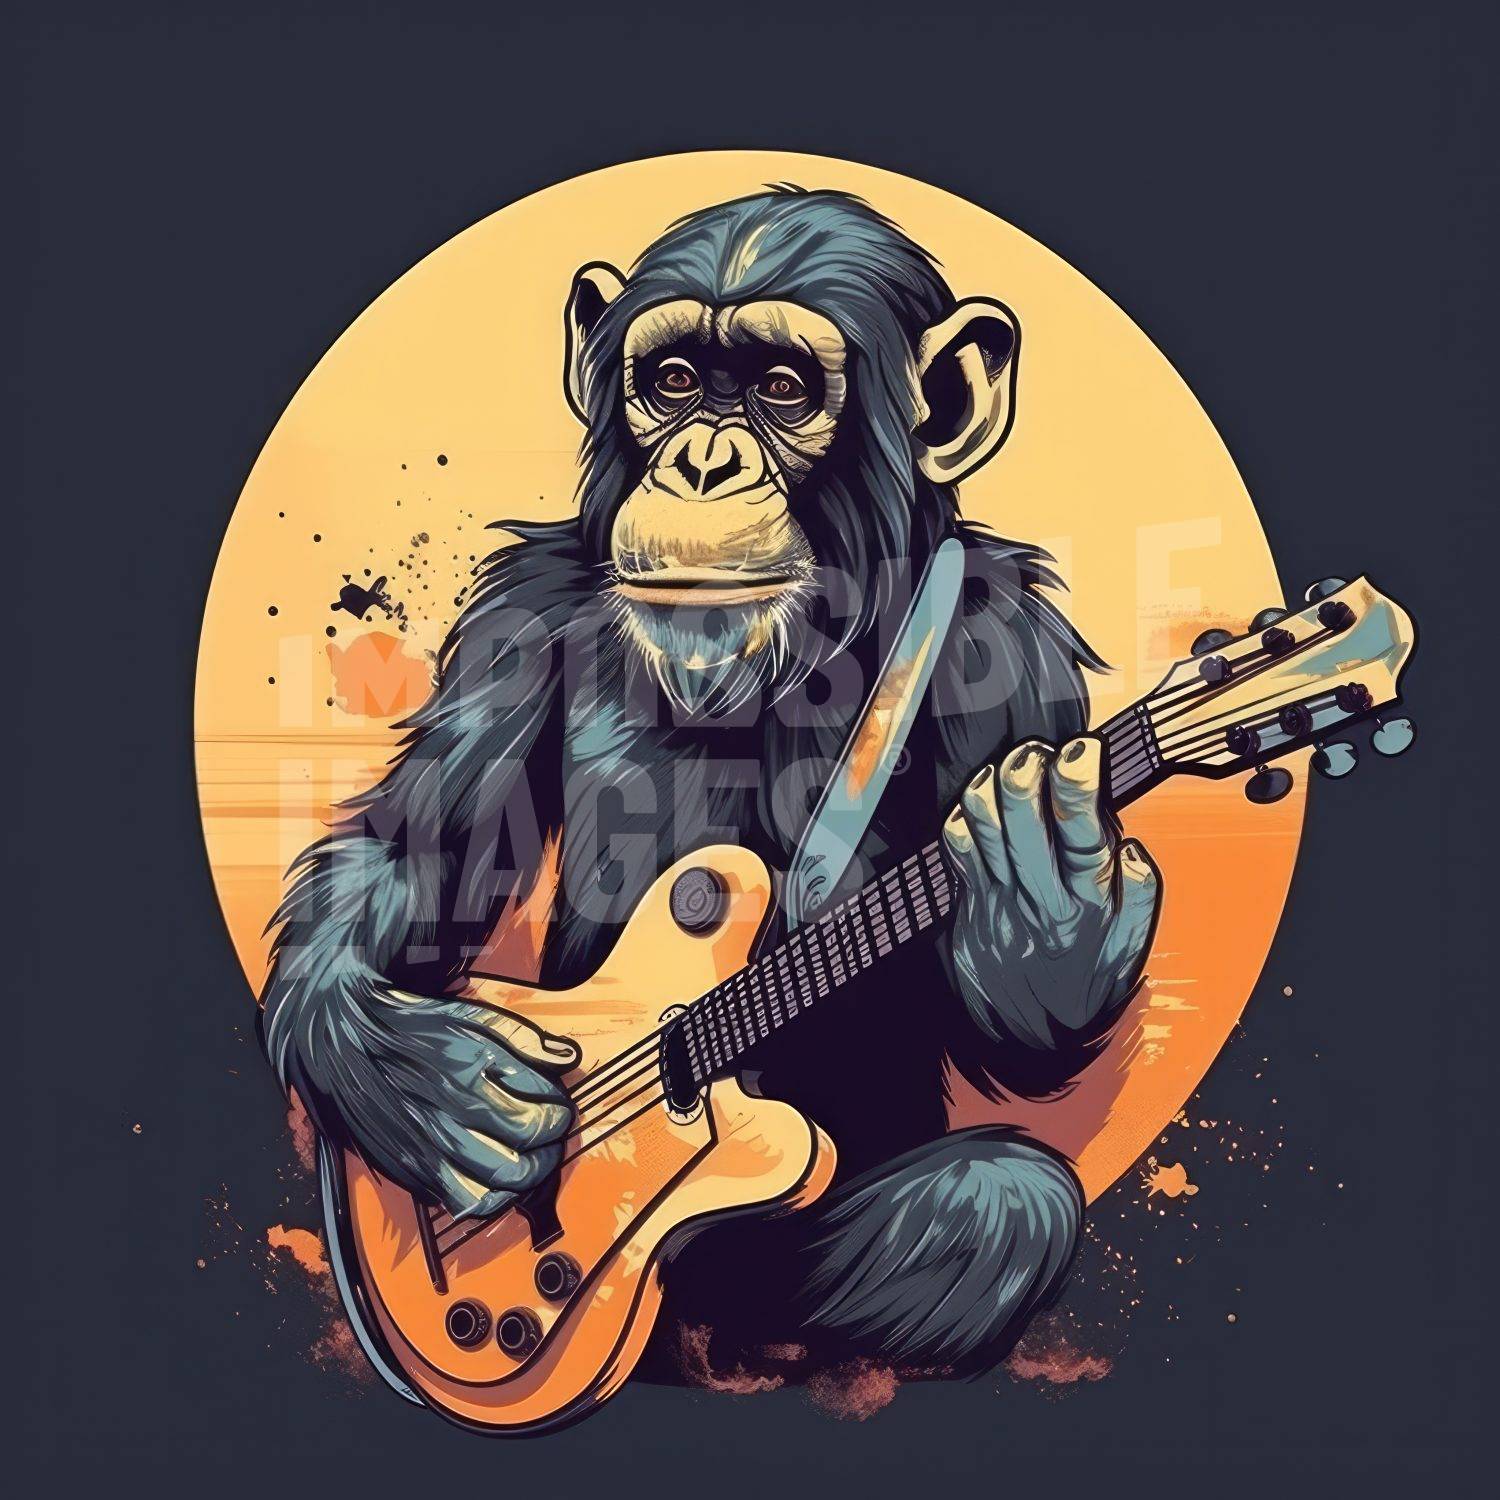 Chimp playing a guitar - 